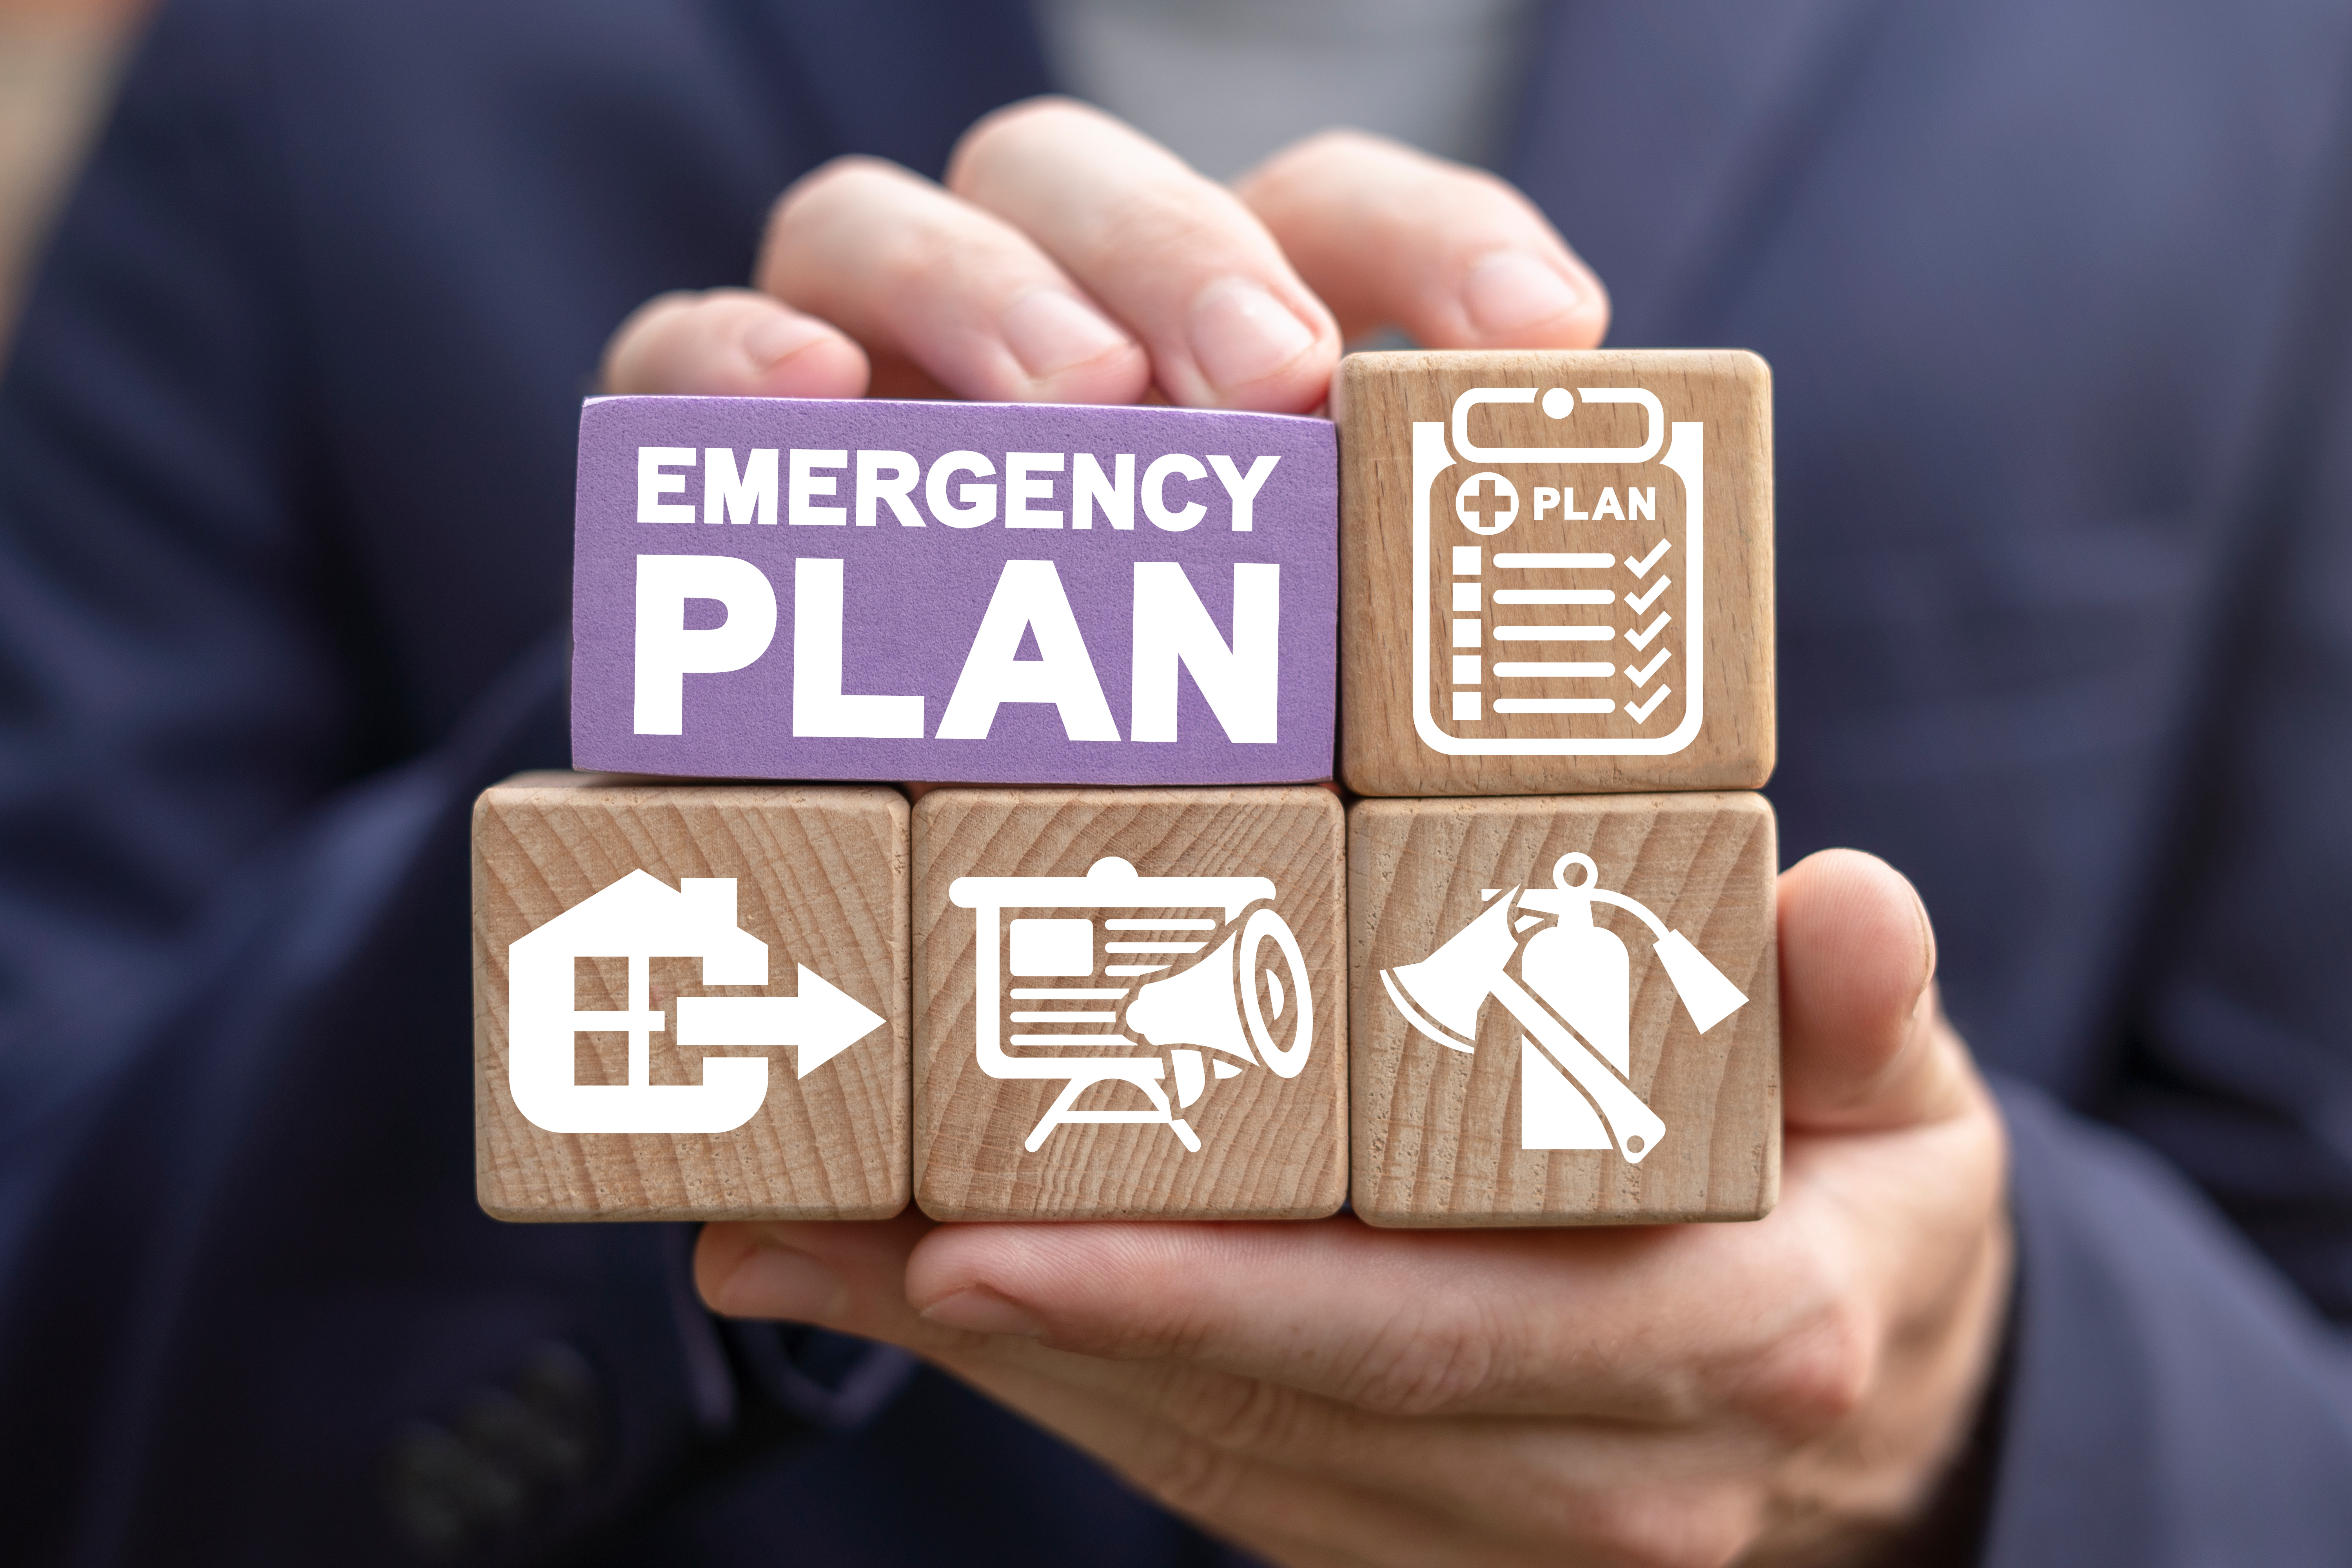 Concept of Emergency Preparedness Plan